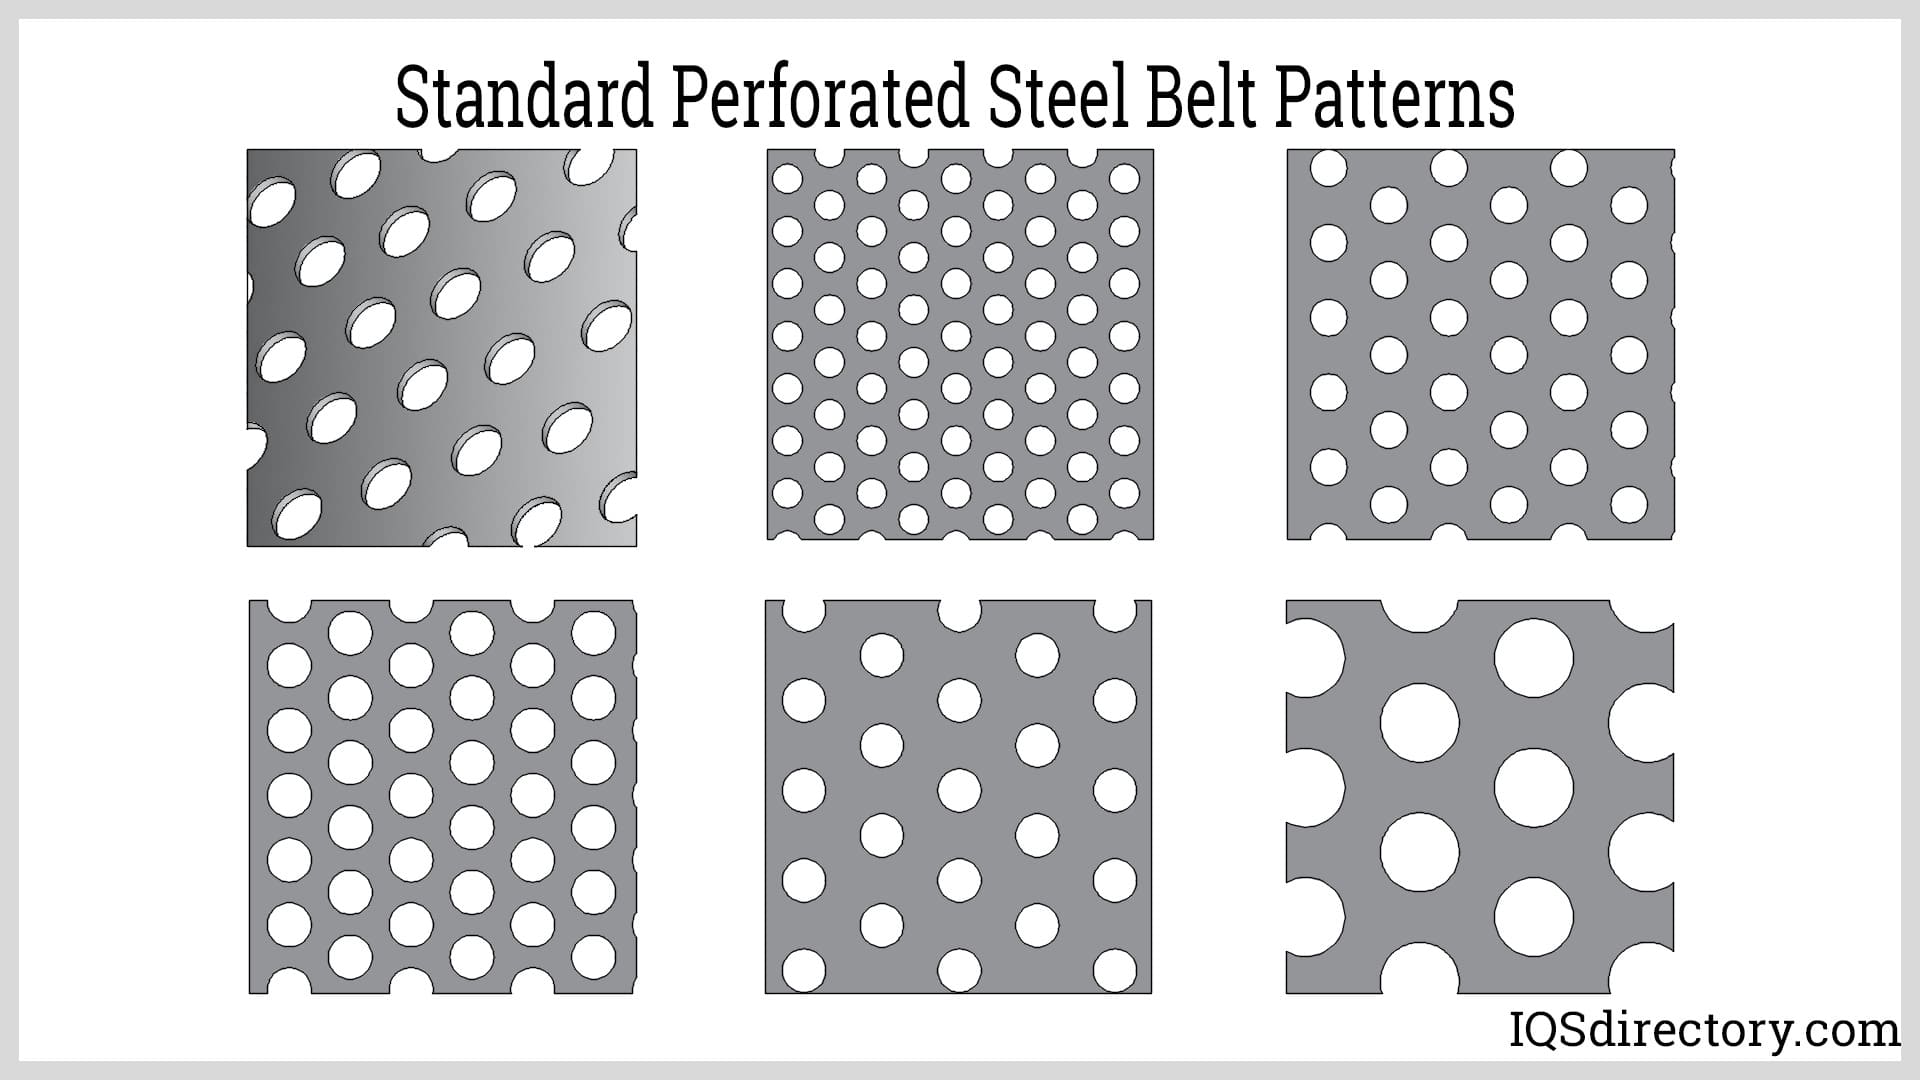 Standard Perforated Steel Belt Patterns